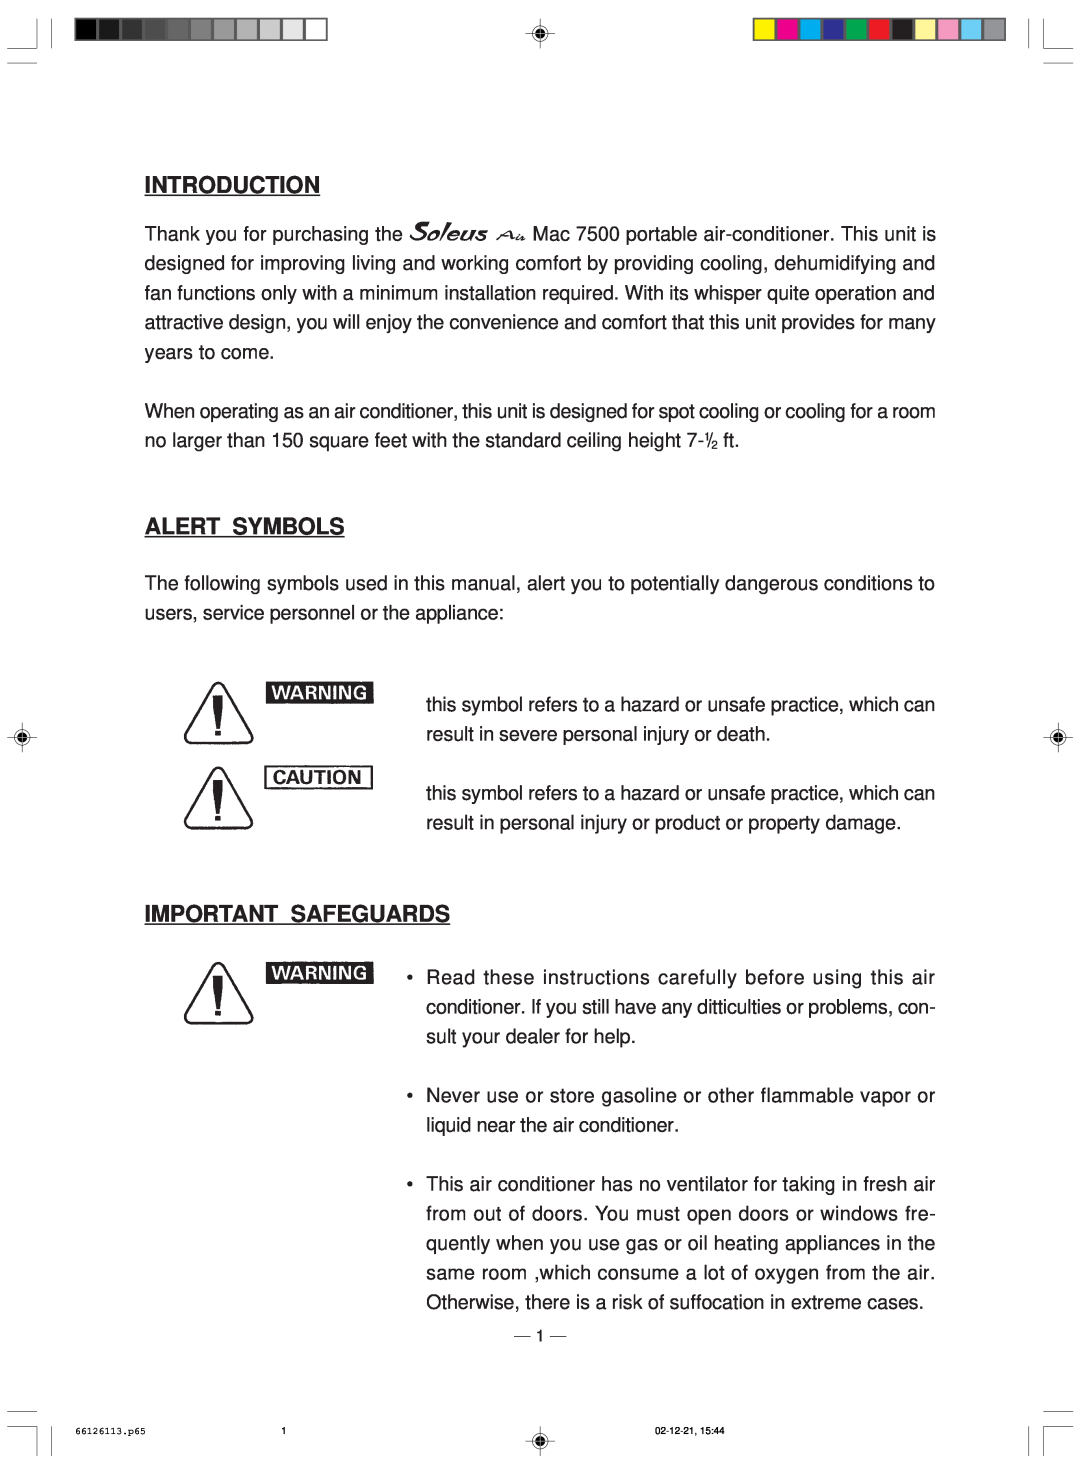 Soleus Air MAC 7500 owner manual Introduction, Alert Symbols, Important Safeguards, 02-12-21,15 